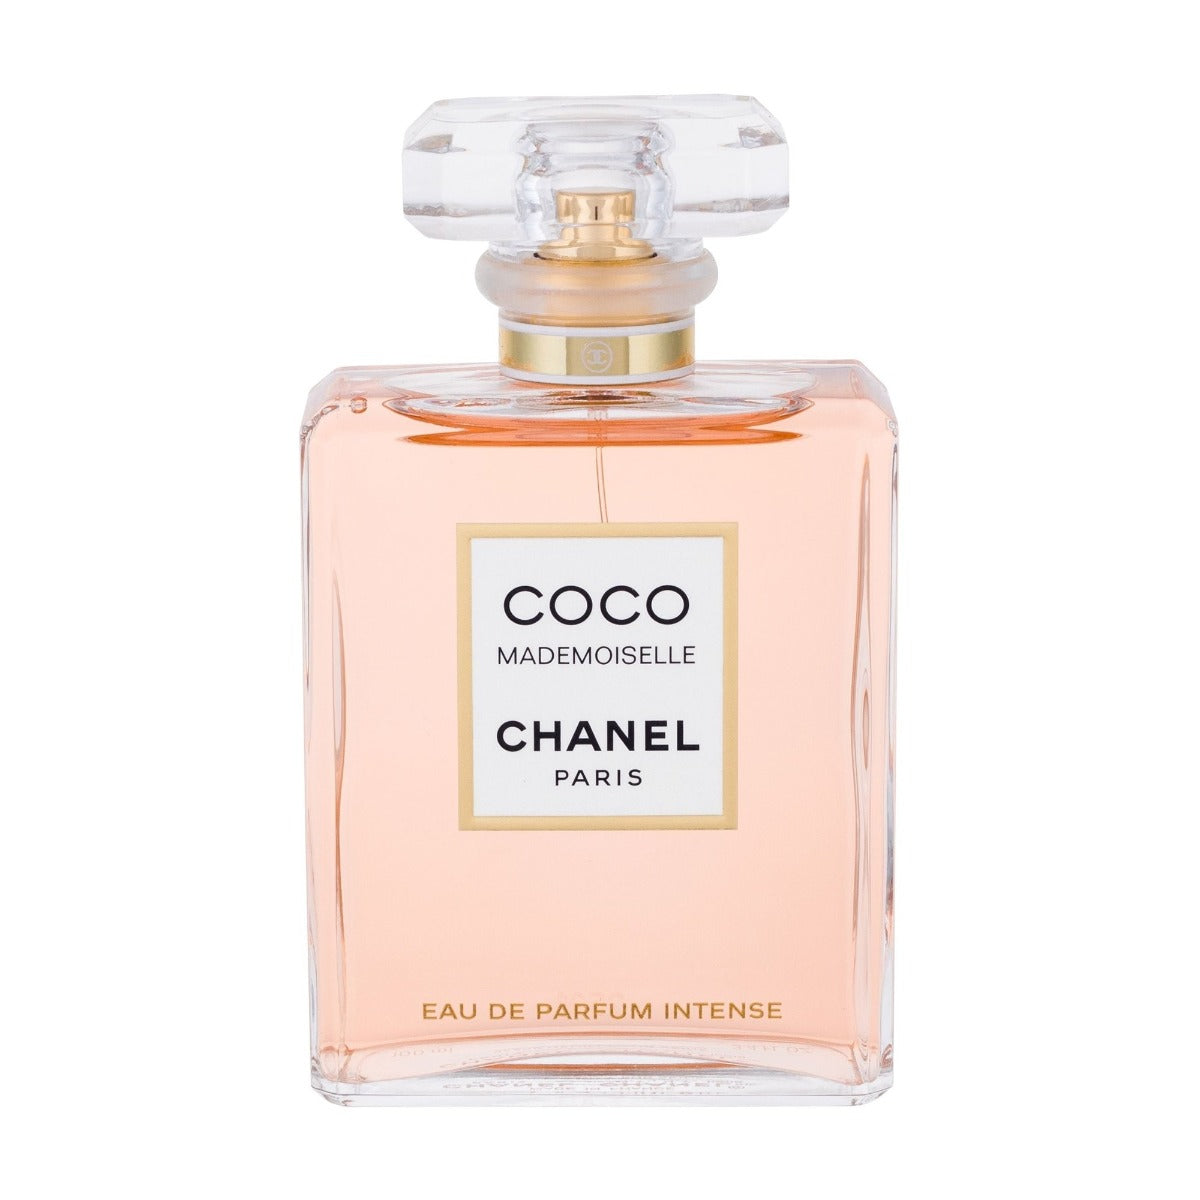 Chanel Coco Mademoiselle for Women - Eau de Parfum, 50 ml - samawa perfumes 